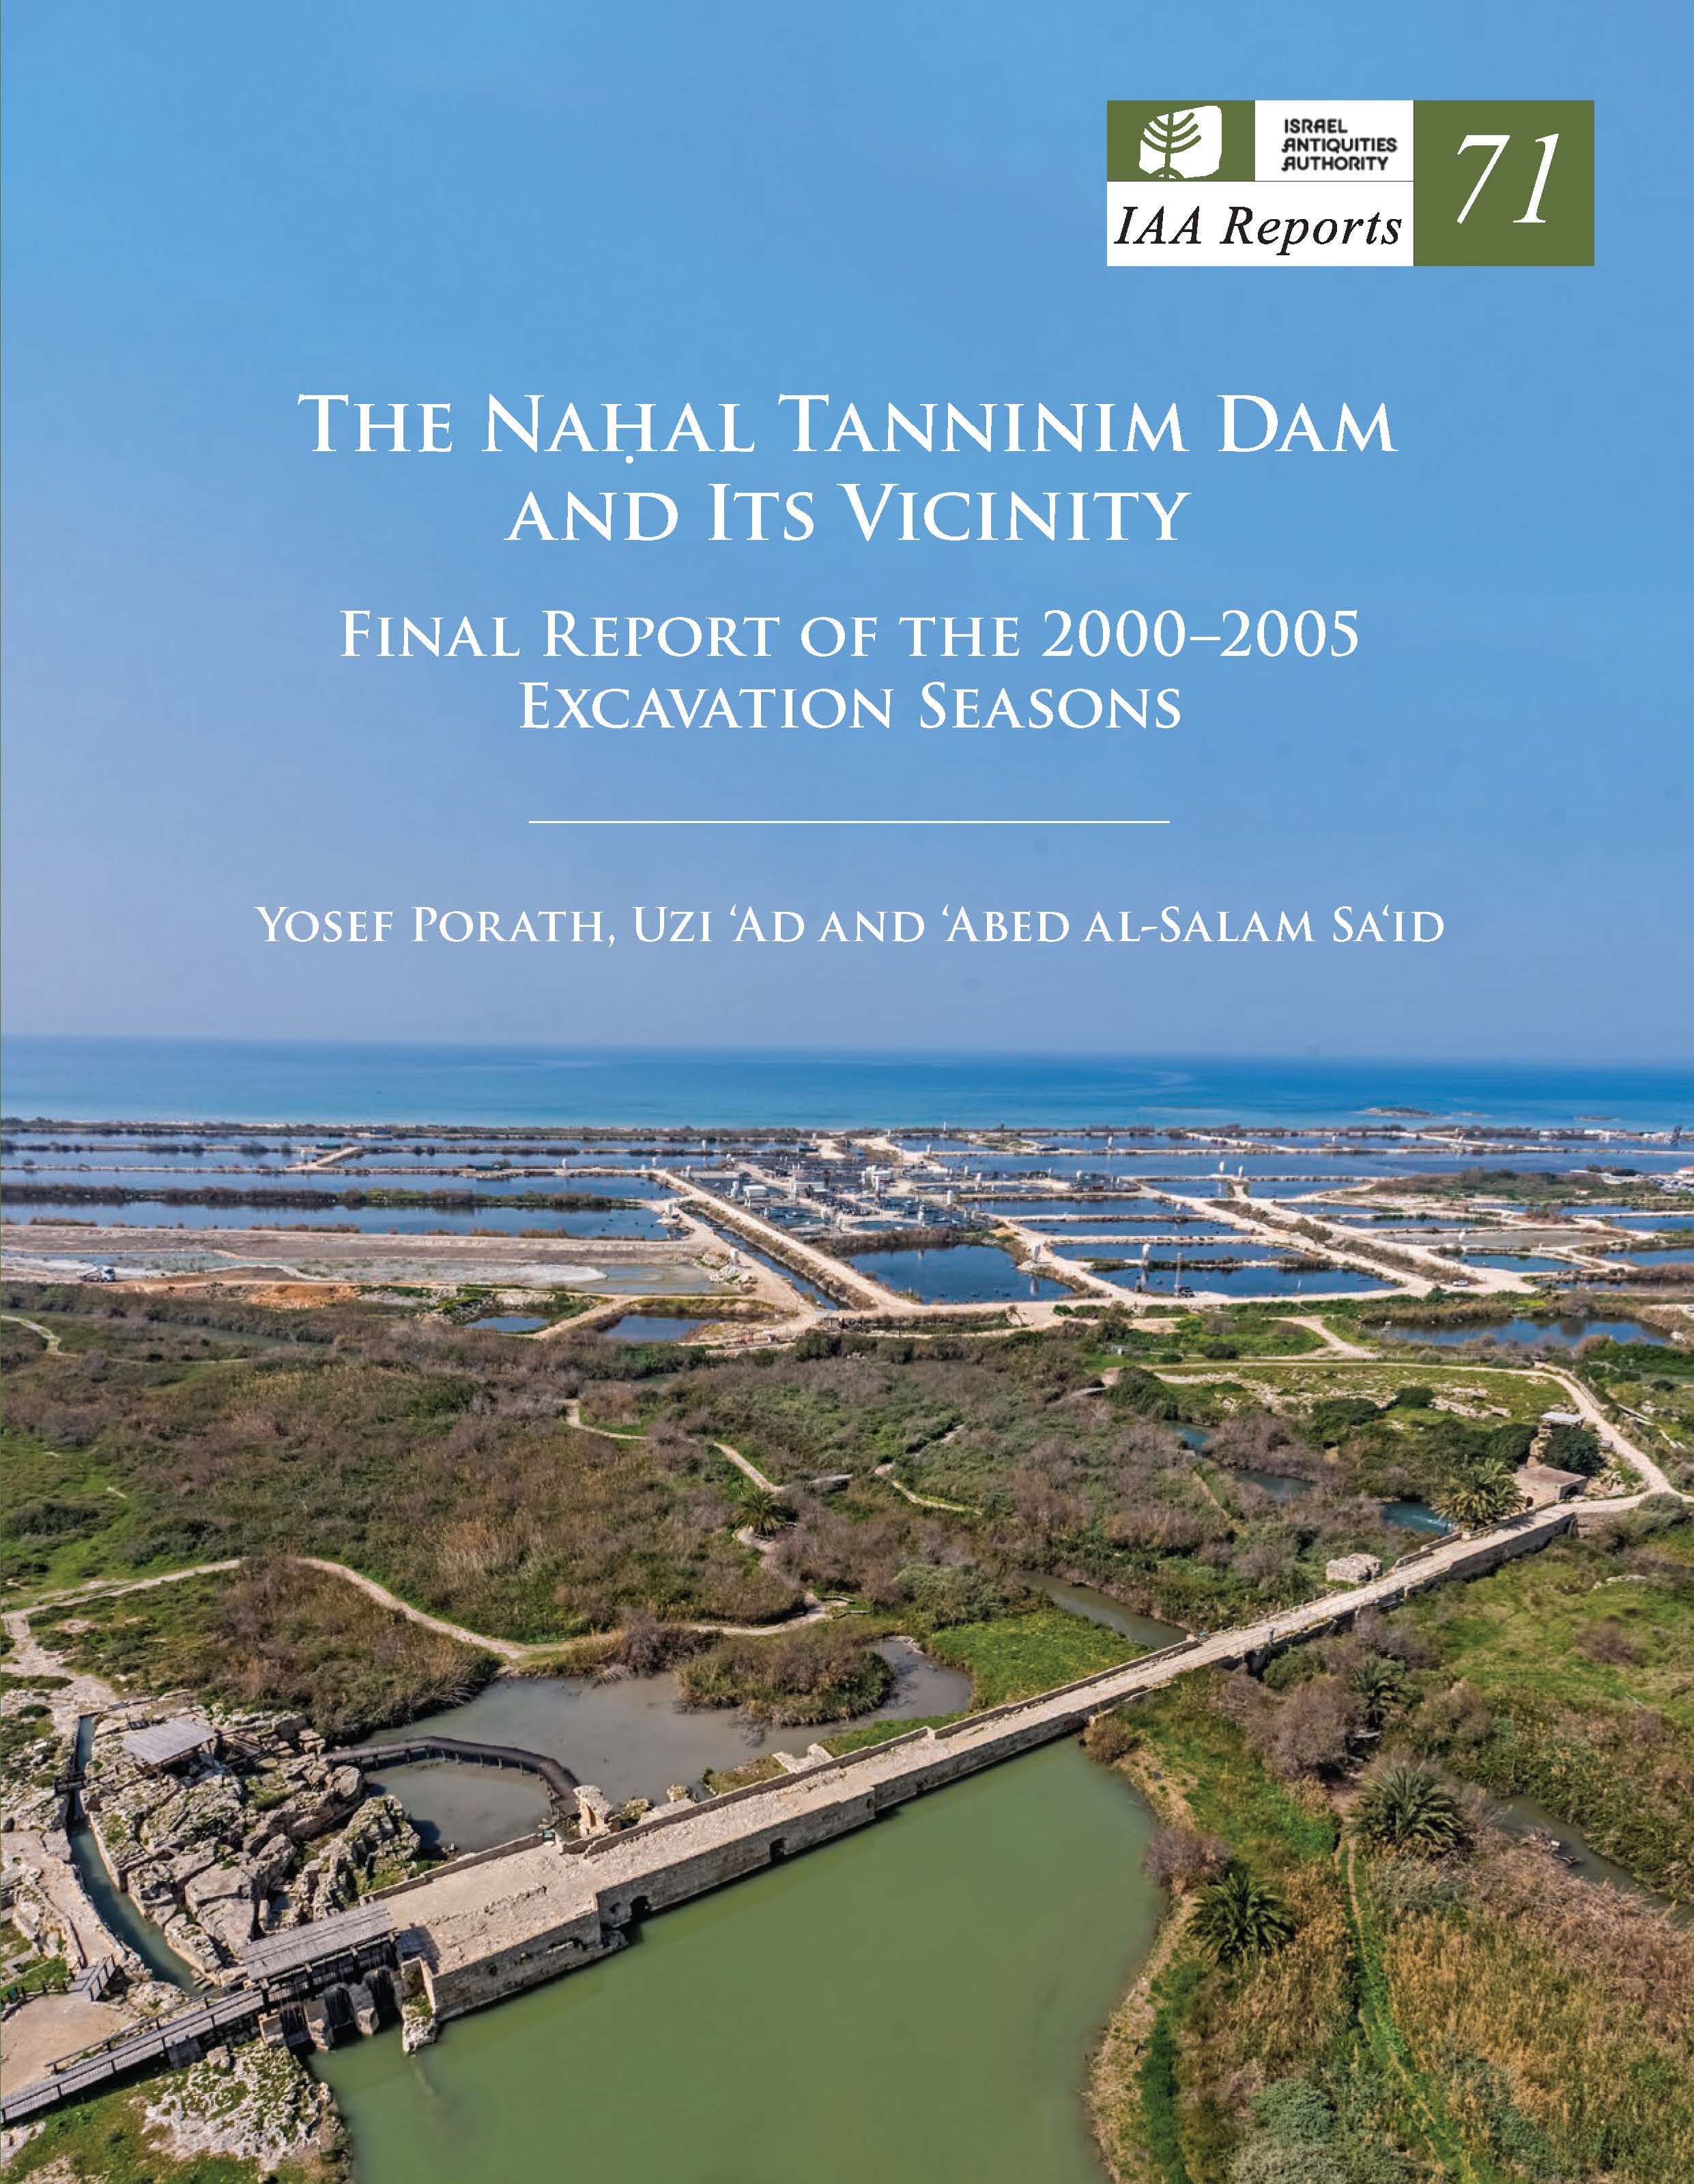 IAA Reports 71 - סכר נחל תנינים וסביבותיו: דוח סופי של עונות חפירה 2000-2005